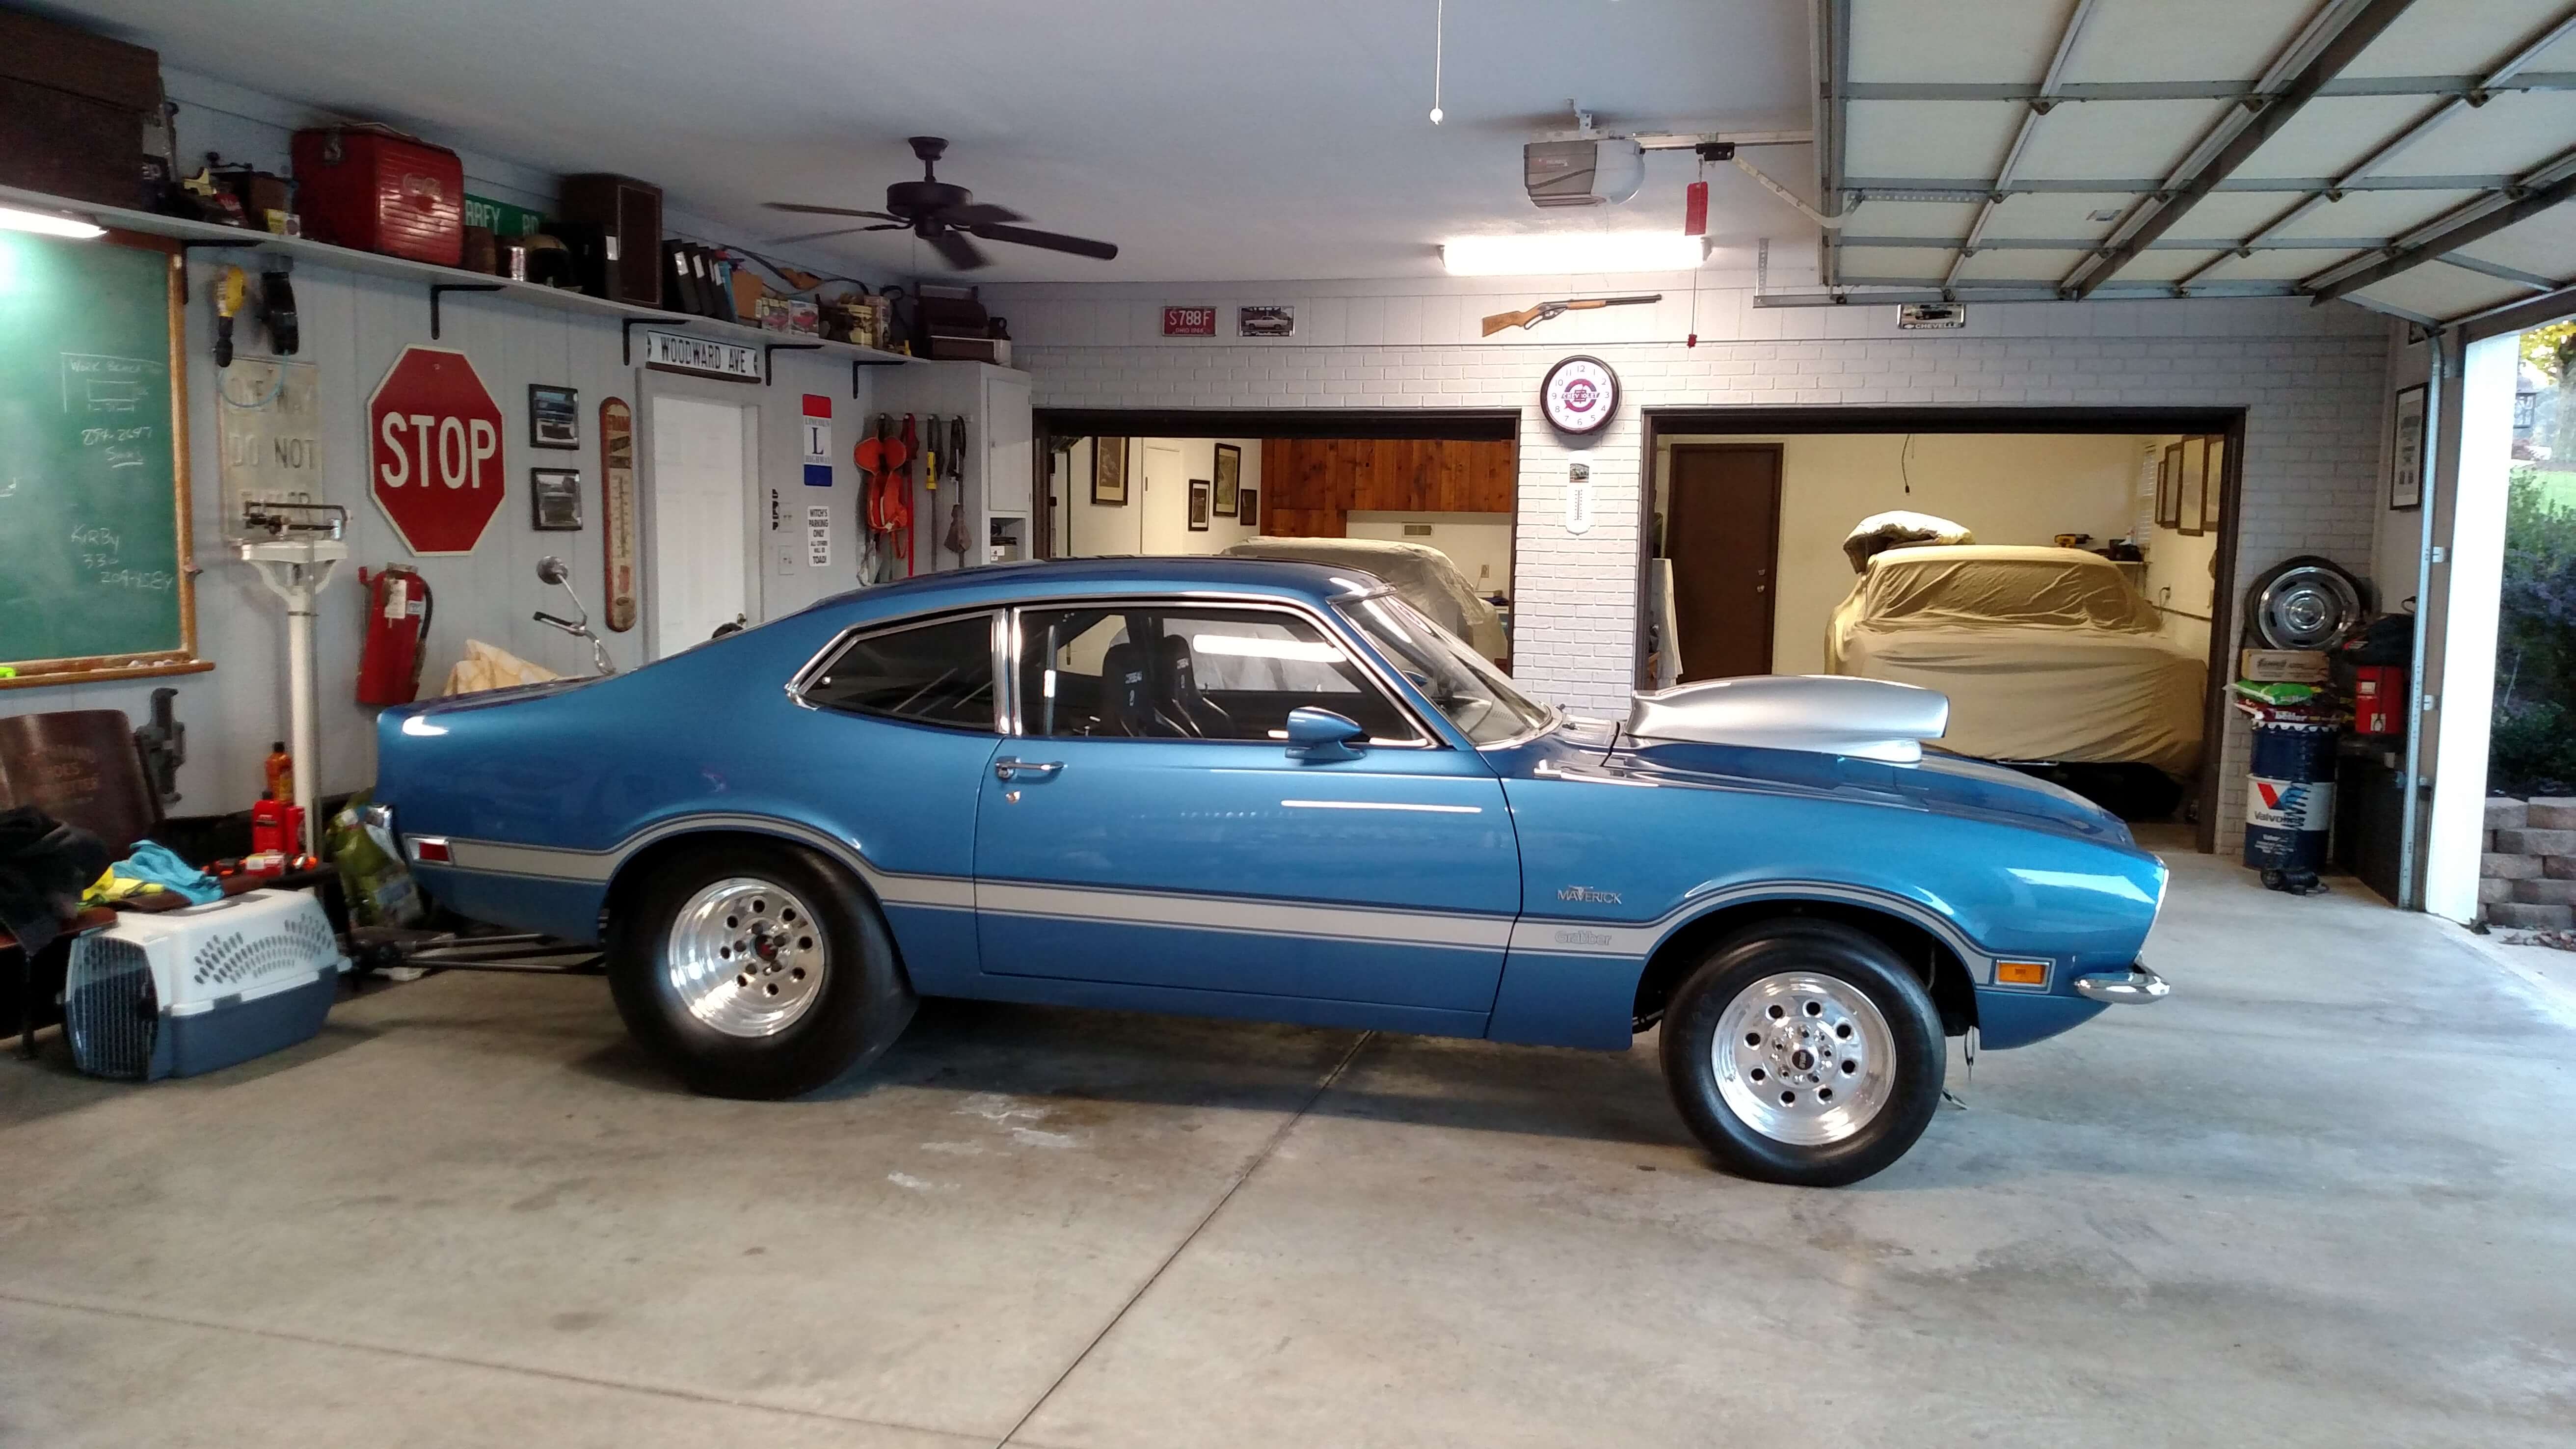 Gary's 1971 Ford Maverick - Holley My Garage